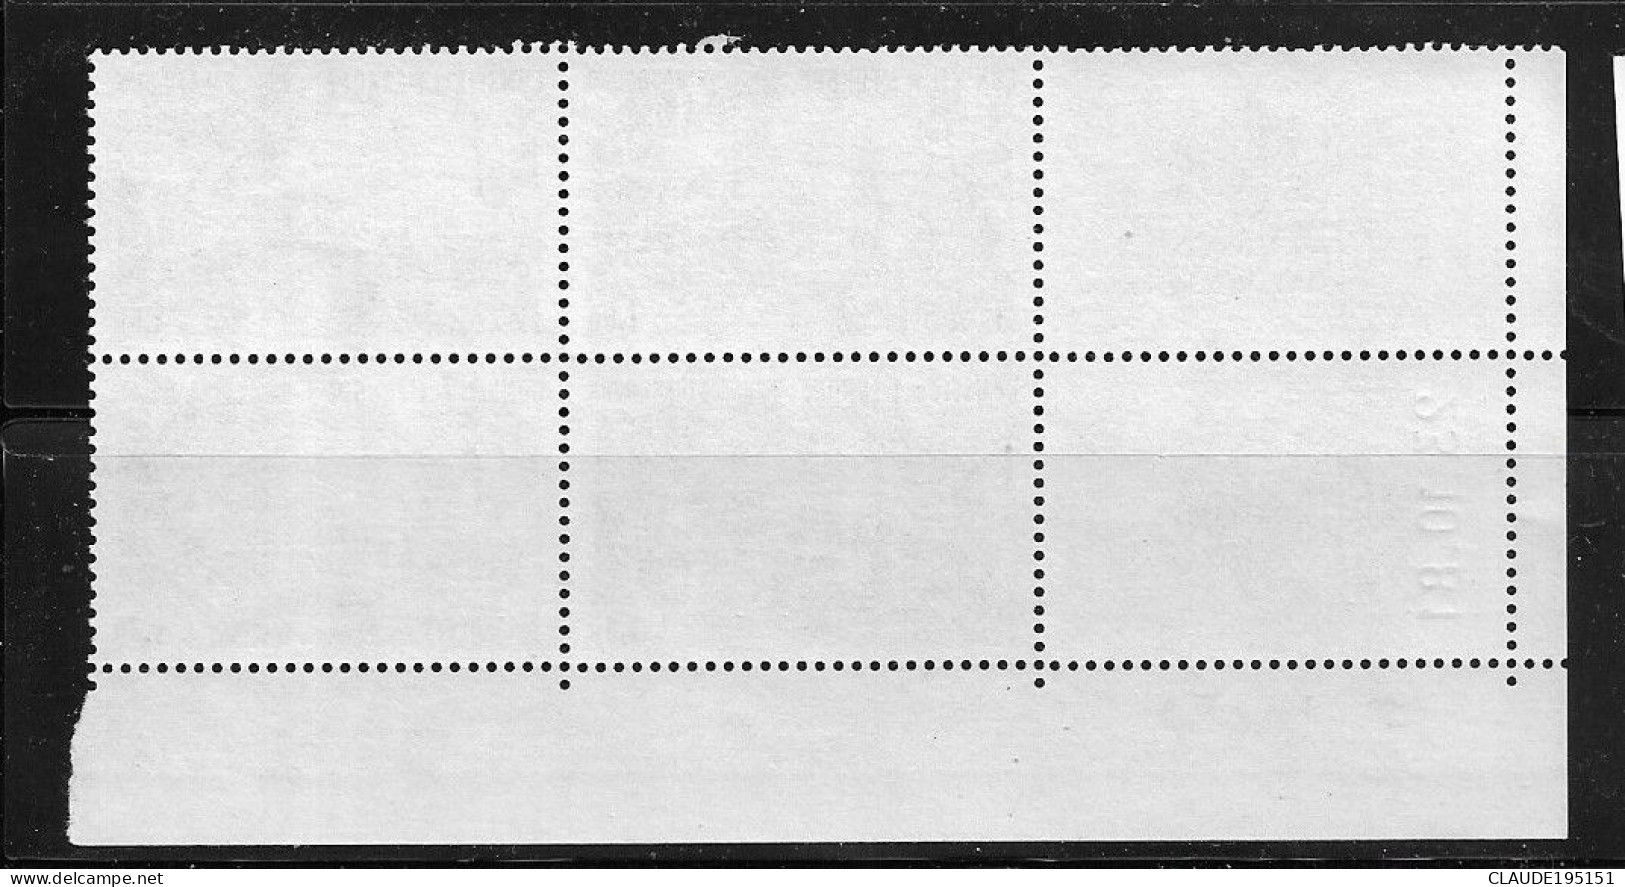 FRANCE 1981  SERVICE   N° 41**  23.10.81  COIN DATE GOMME D'ORIGINE SANS CHARNIÈRE  NEUF TTB      2 SCANS - Dienstmarken